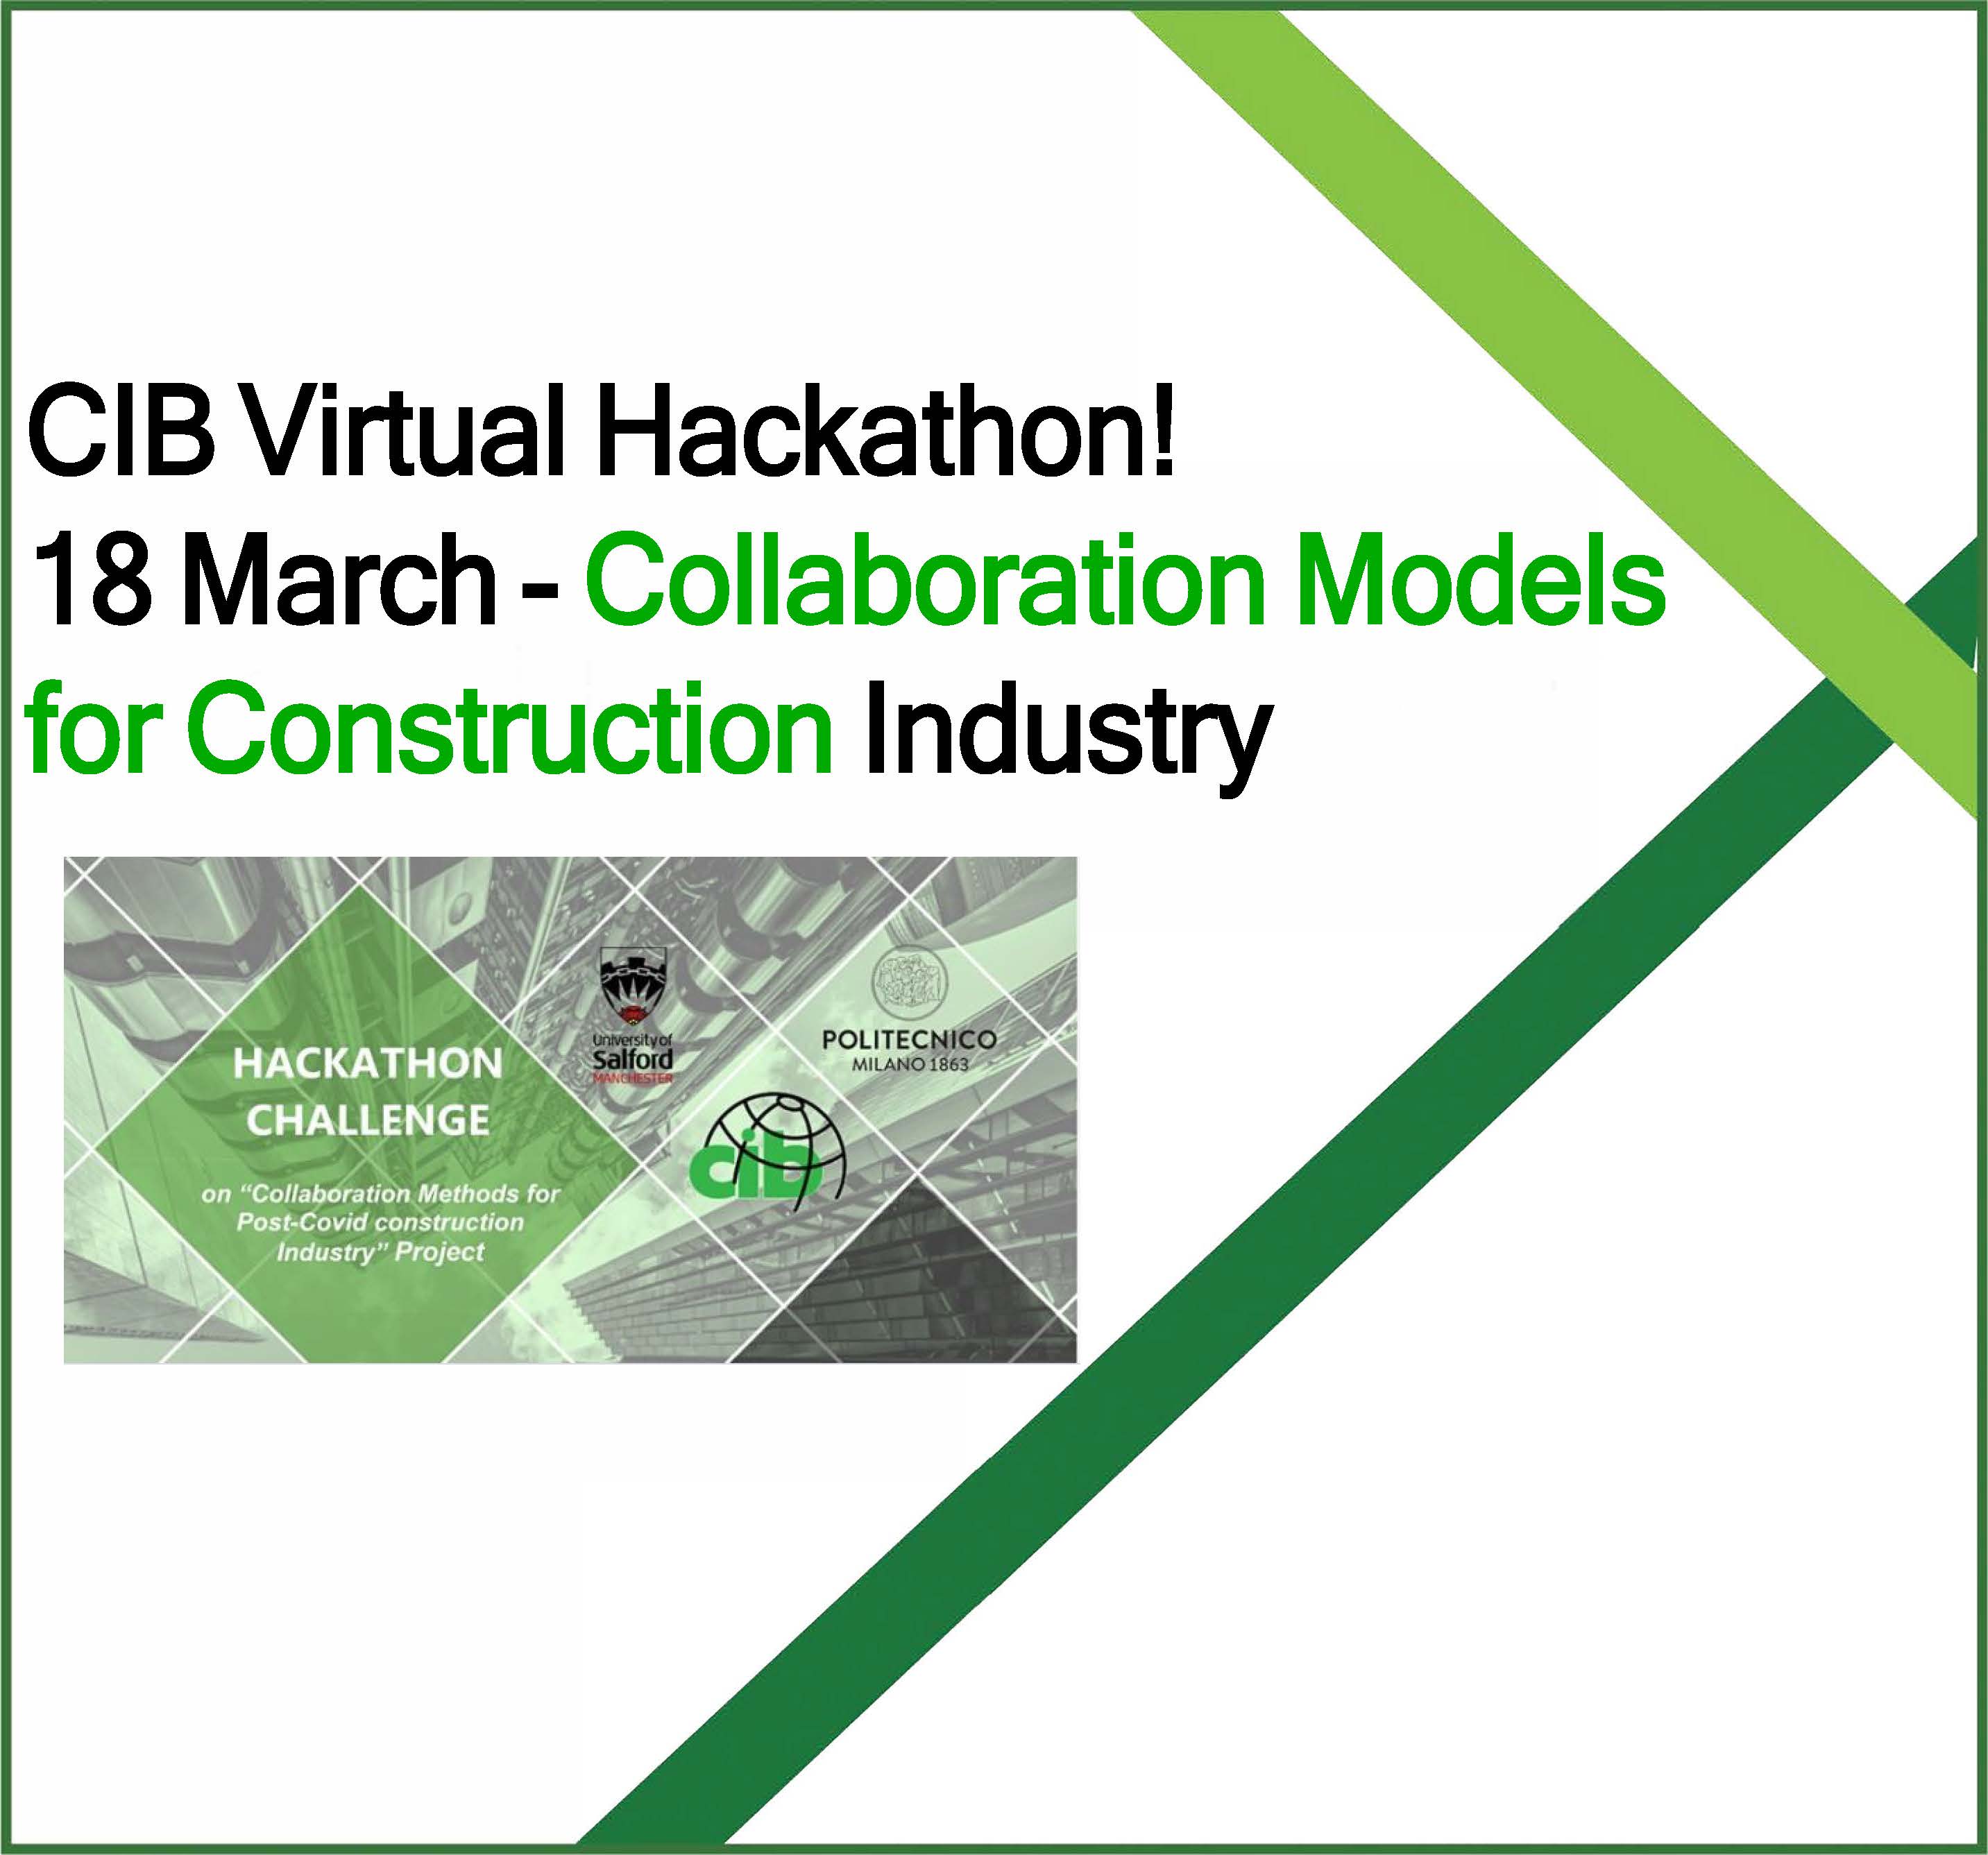 CIB’s Virtual Hackathon – Collaboration Models for Construction Industry